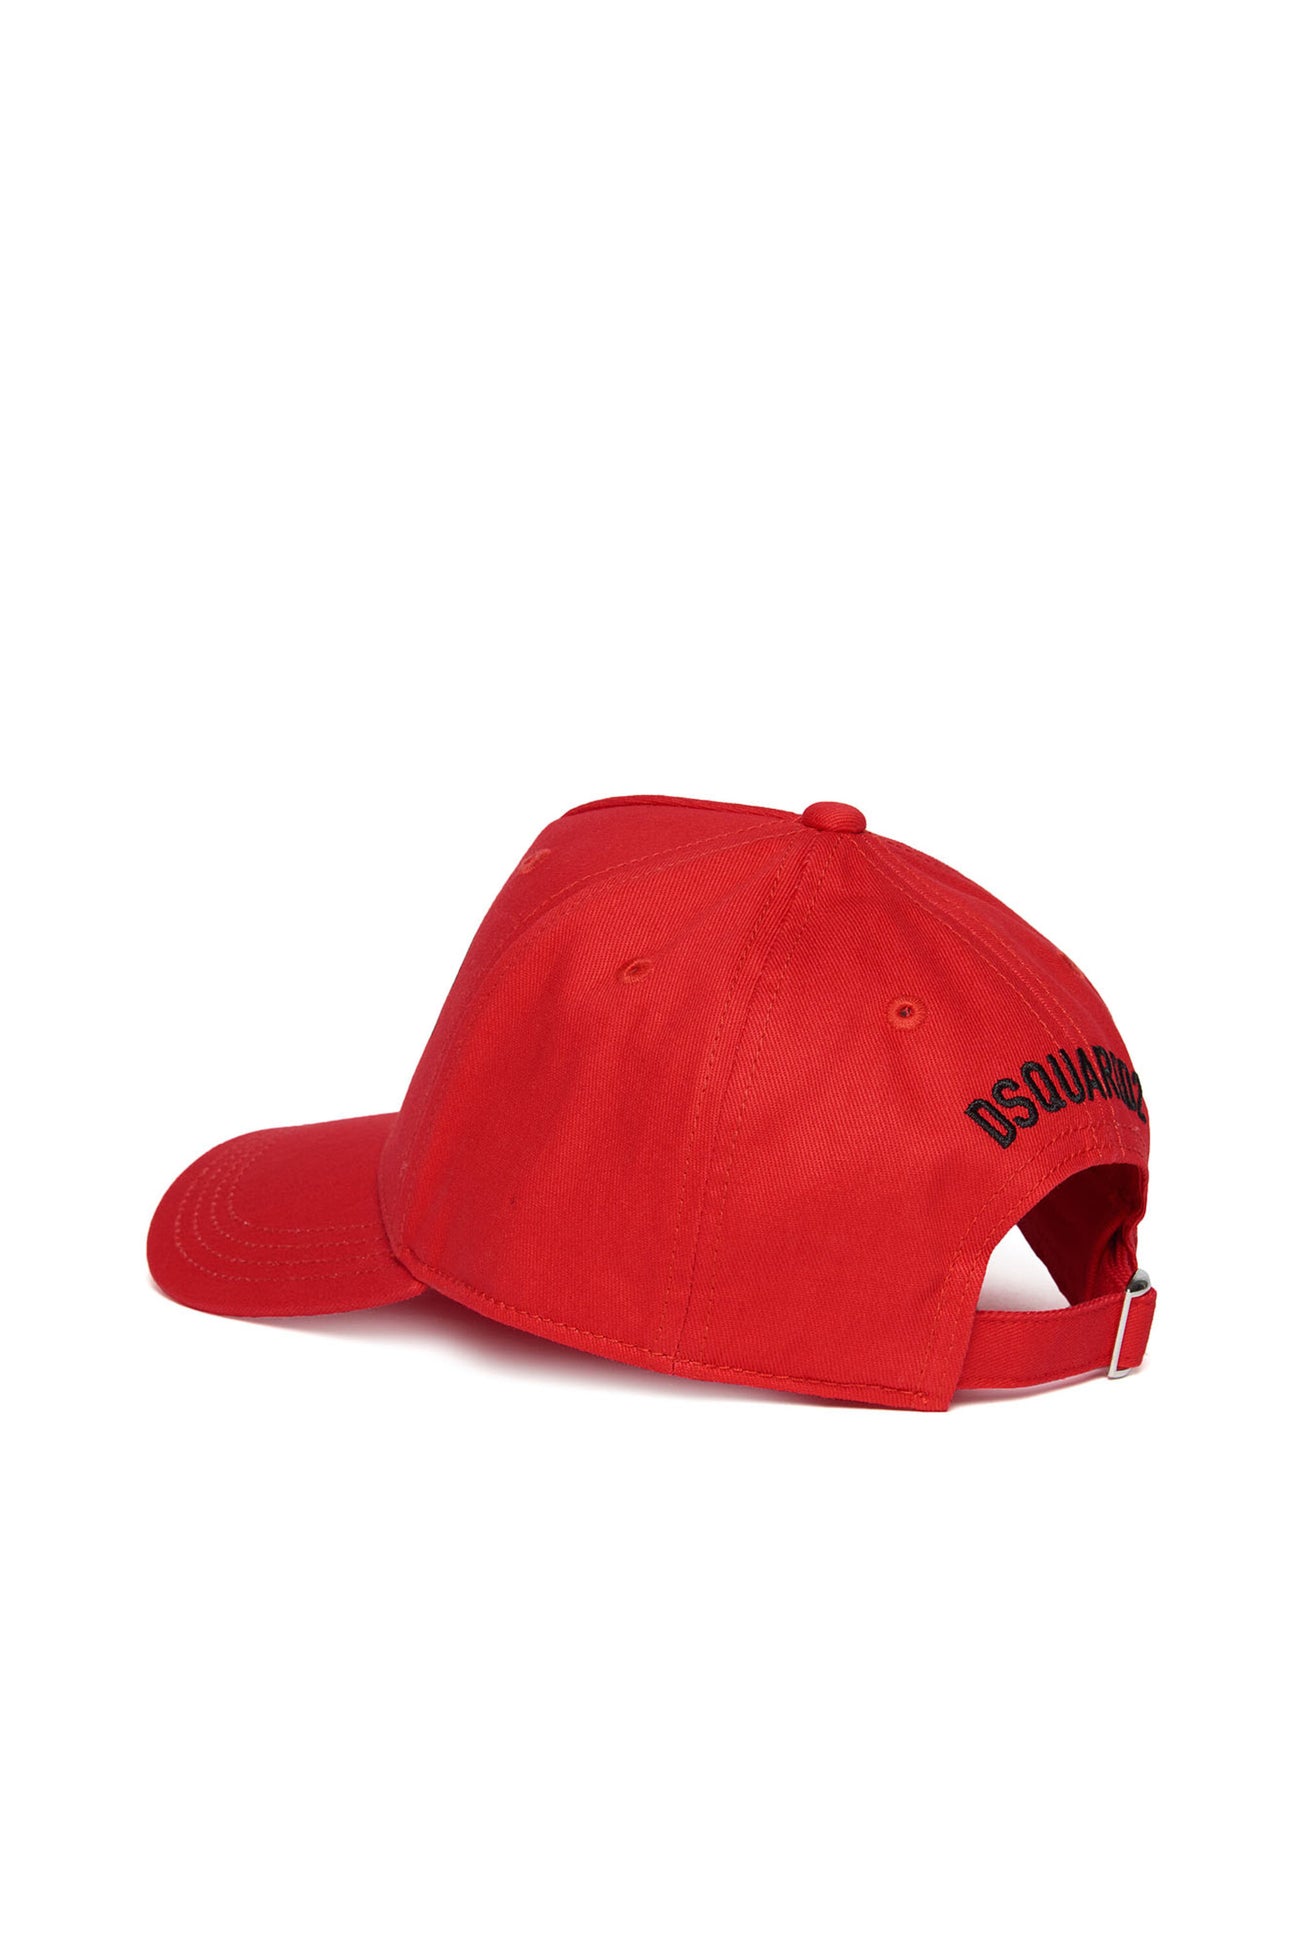 DSQ2 logo branded baseball cap est.1995 DSQ2 logo branded baseball cap est.1995